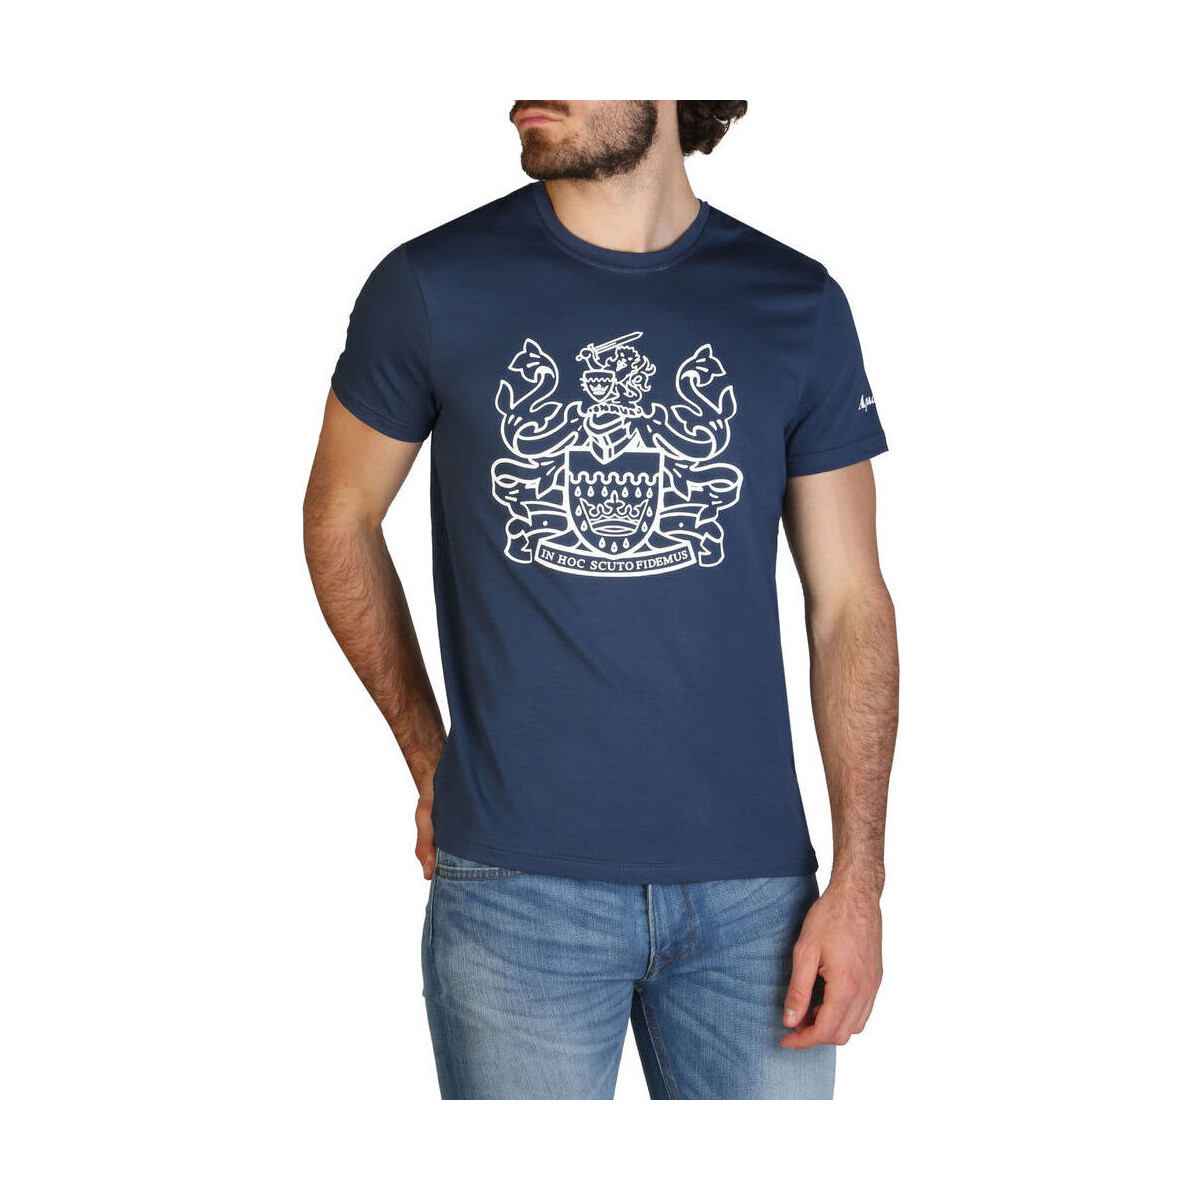 Vêtements Homme T-shirts manches courtes Aquascutum - qmt002m0 Bleu